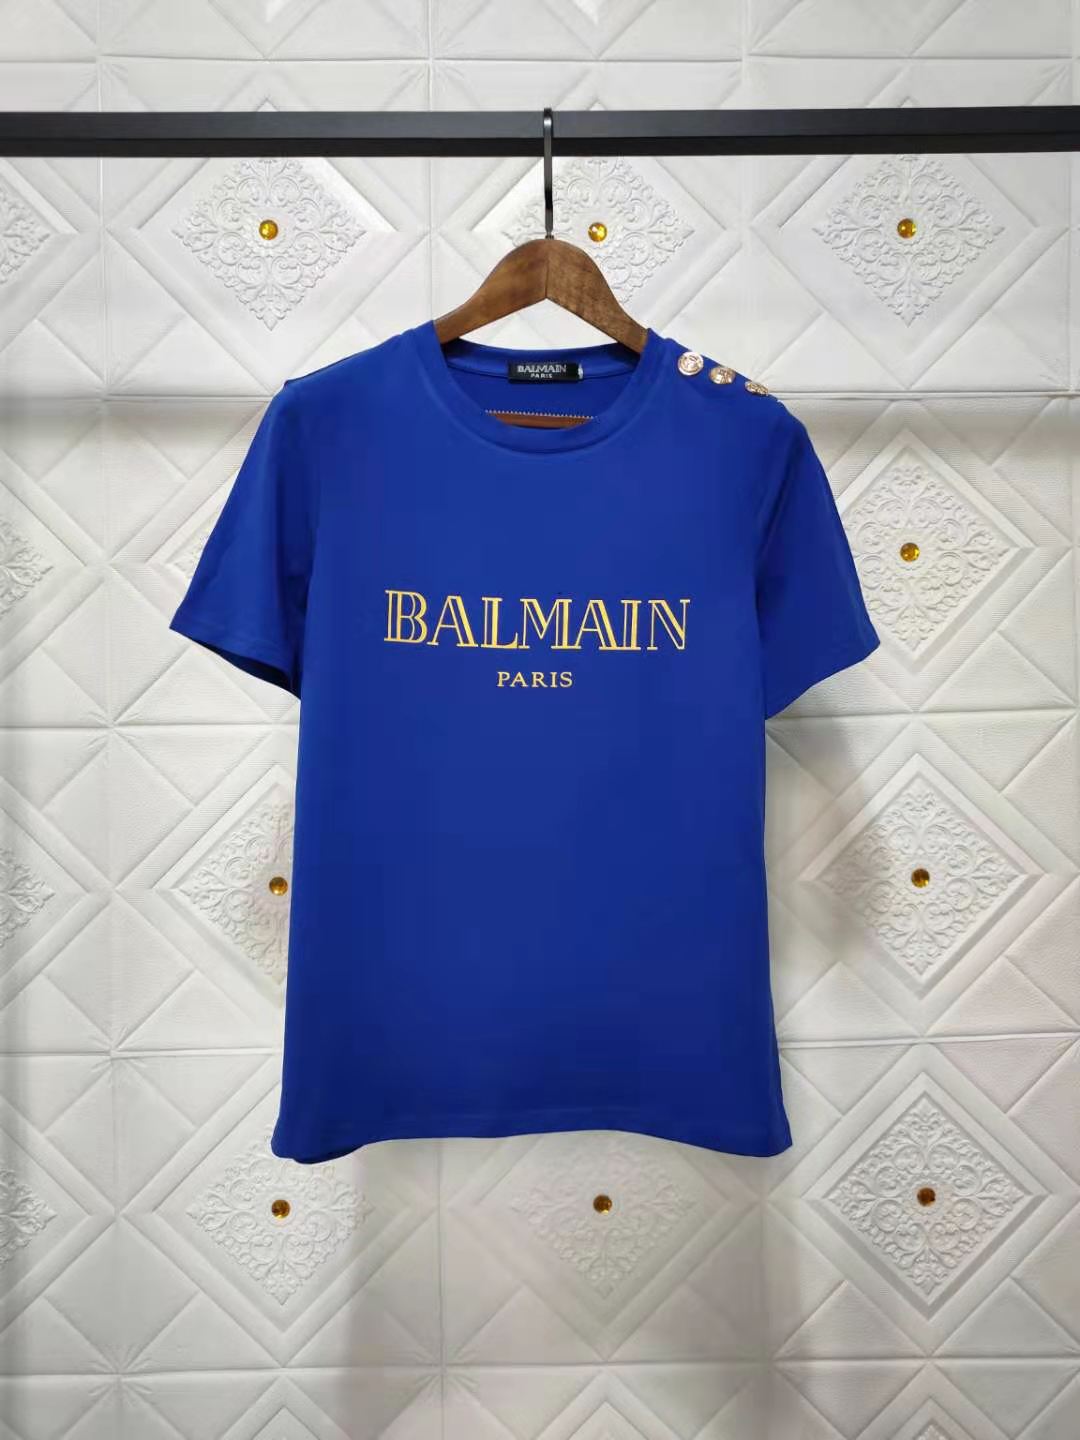 Buy Balmain Tshirt online | Lazada.com.ph